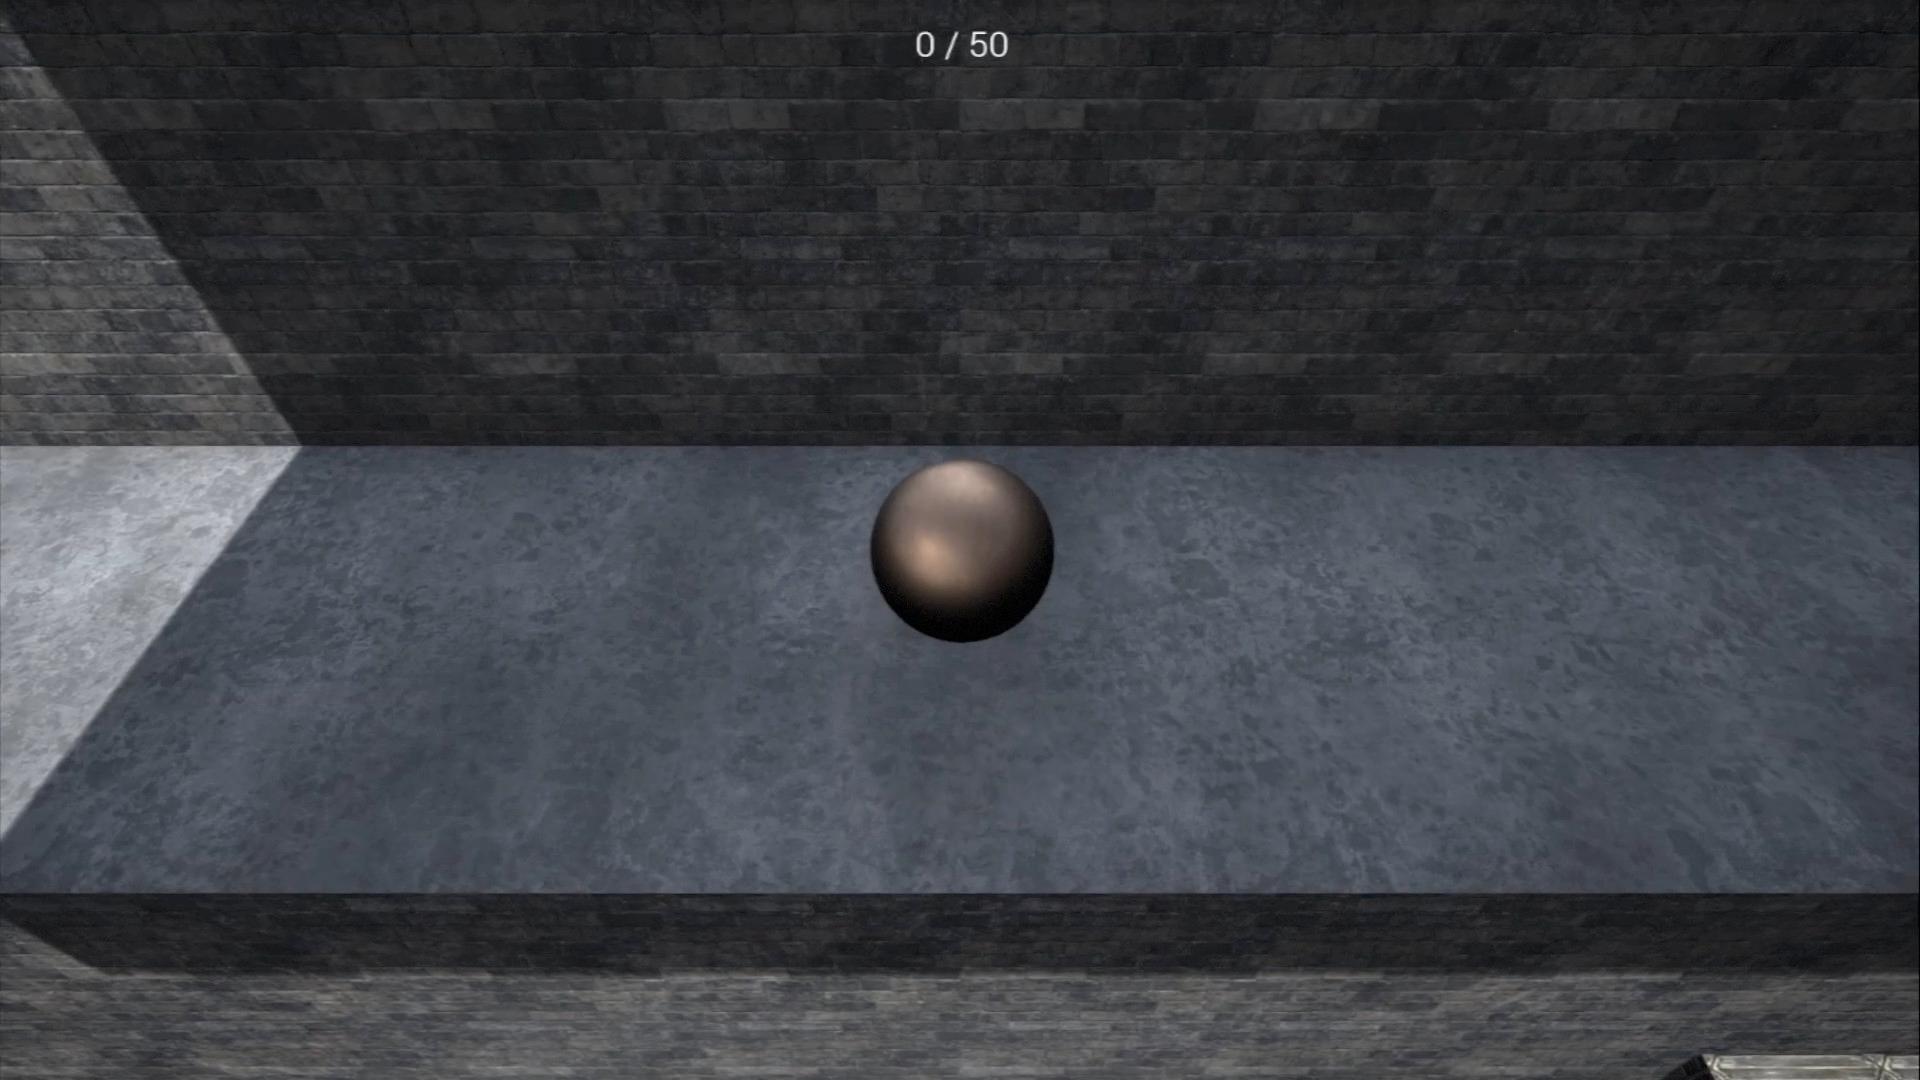 Screenshot №2 from game ZRoll